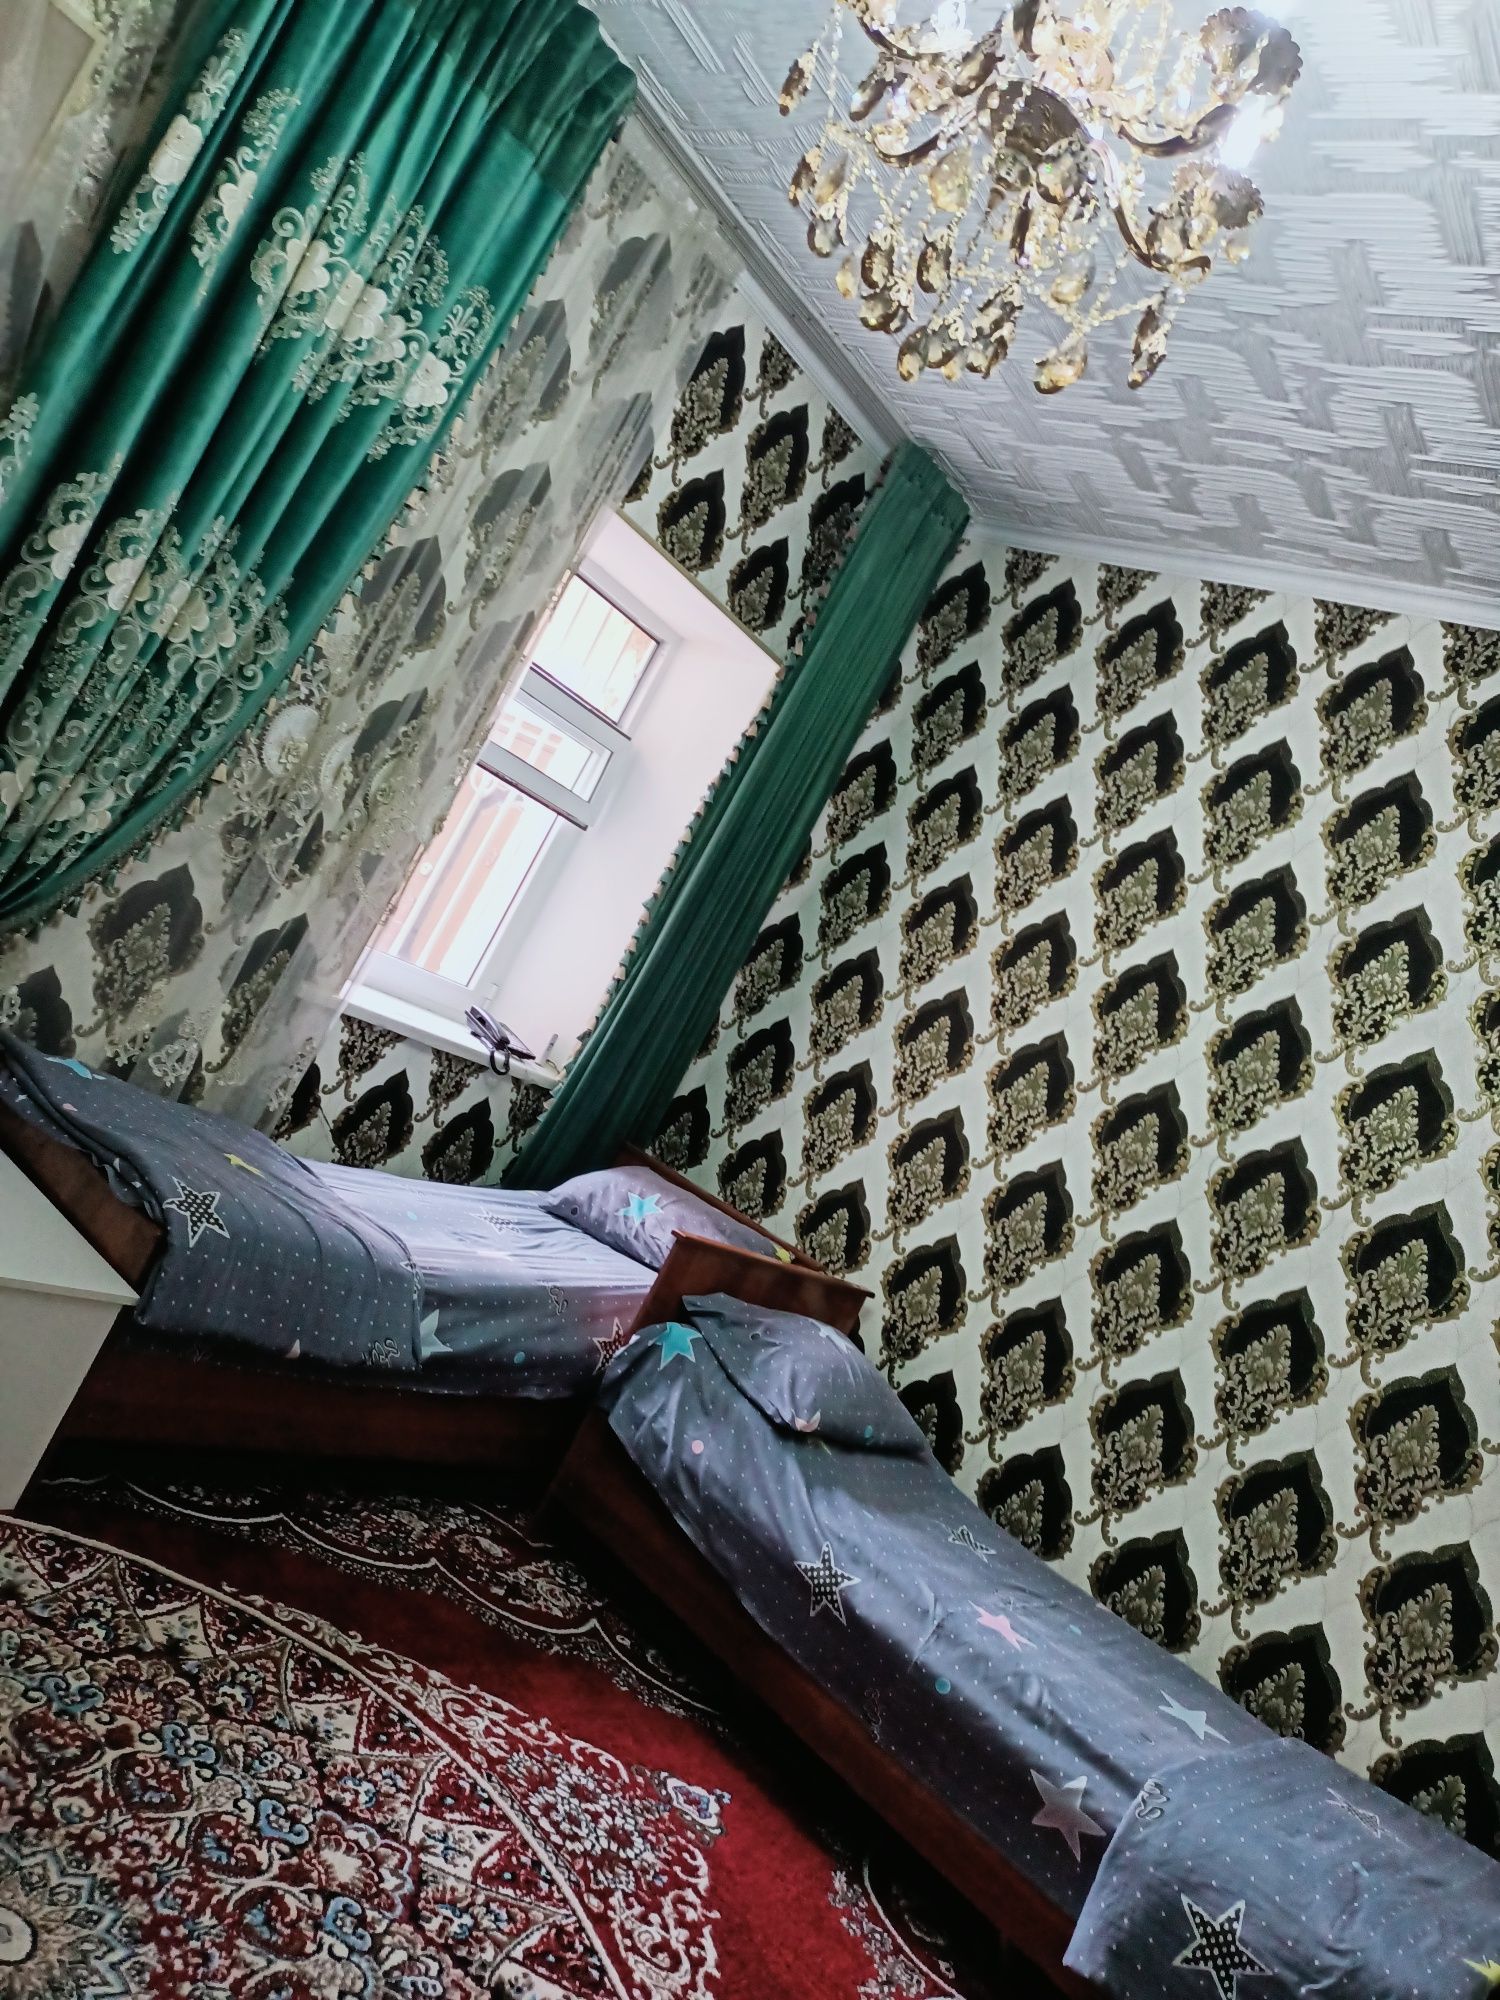 Посуточный дом Hotel гостиница центр Самарканда,хамаси под ключ арзон